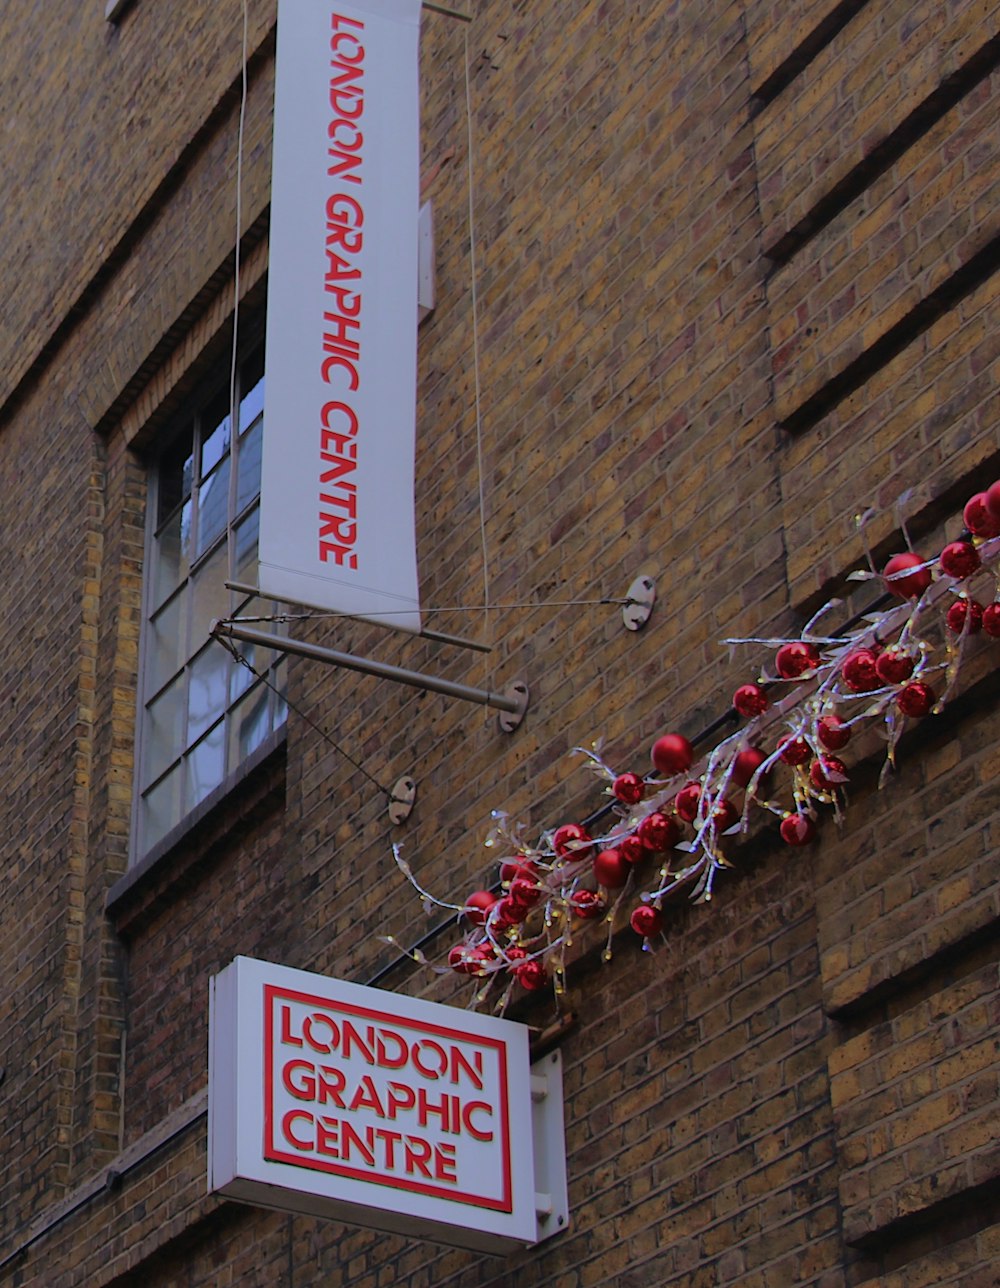 London Graphic Centre brick building